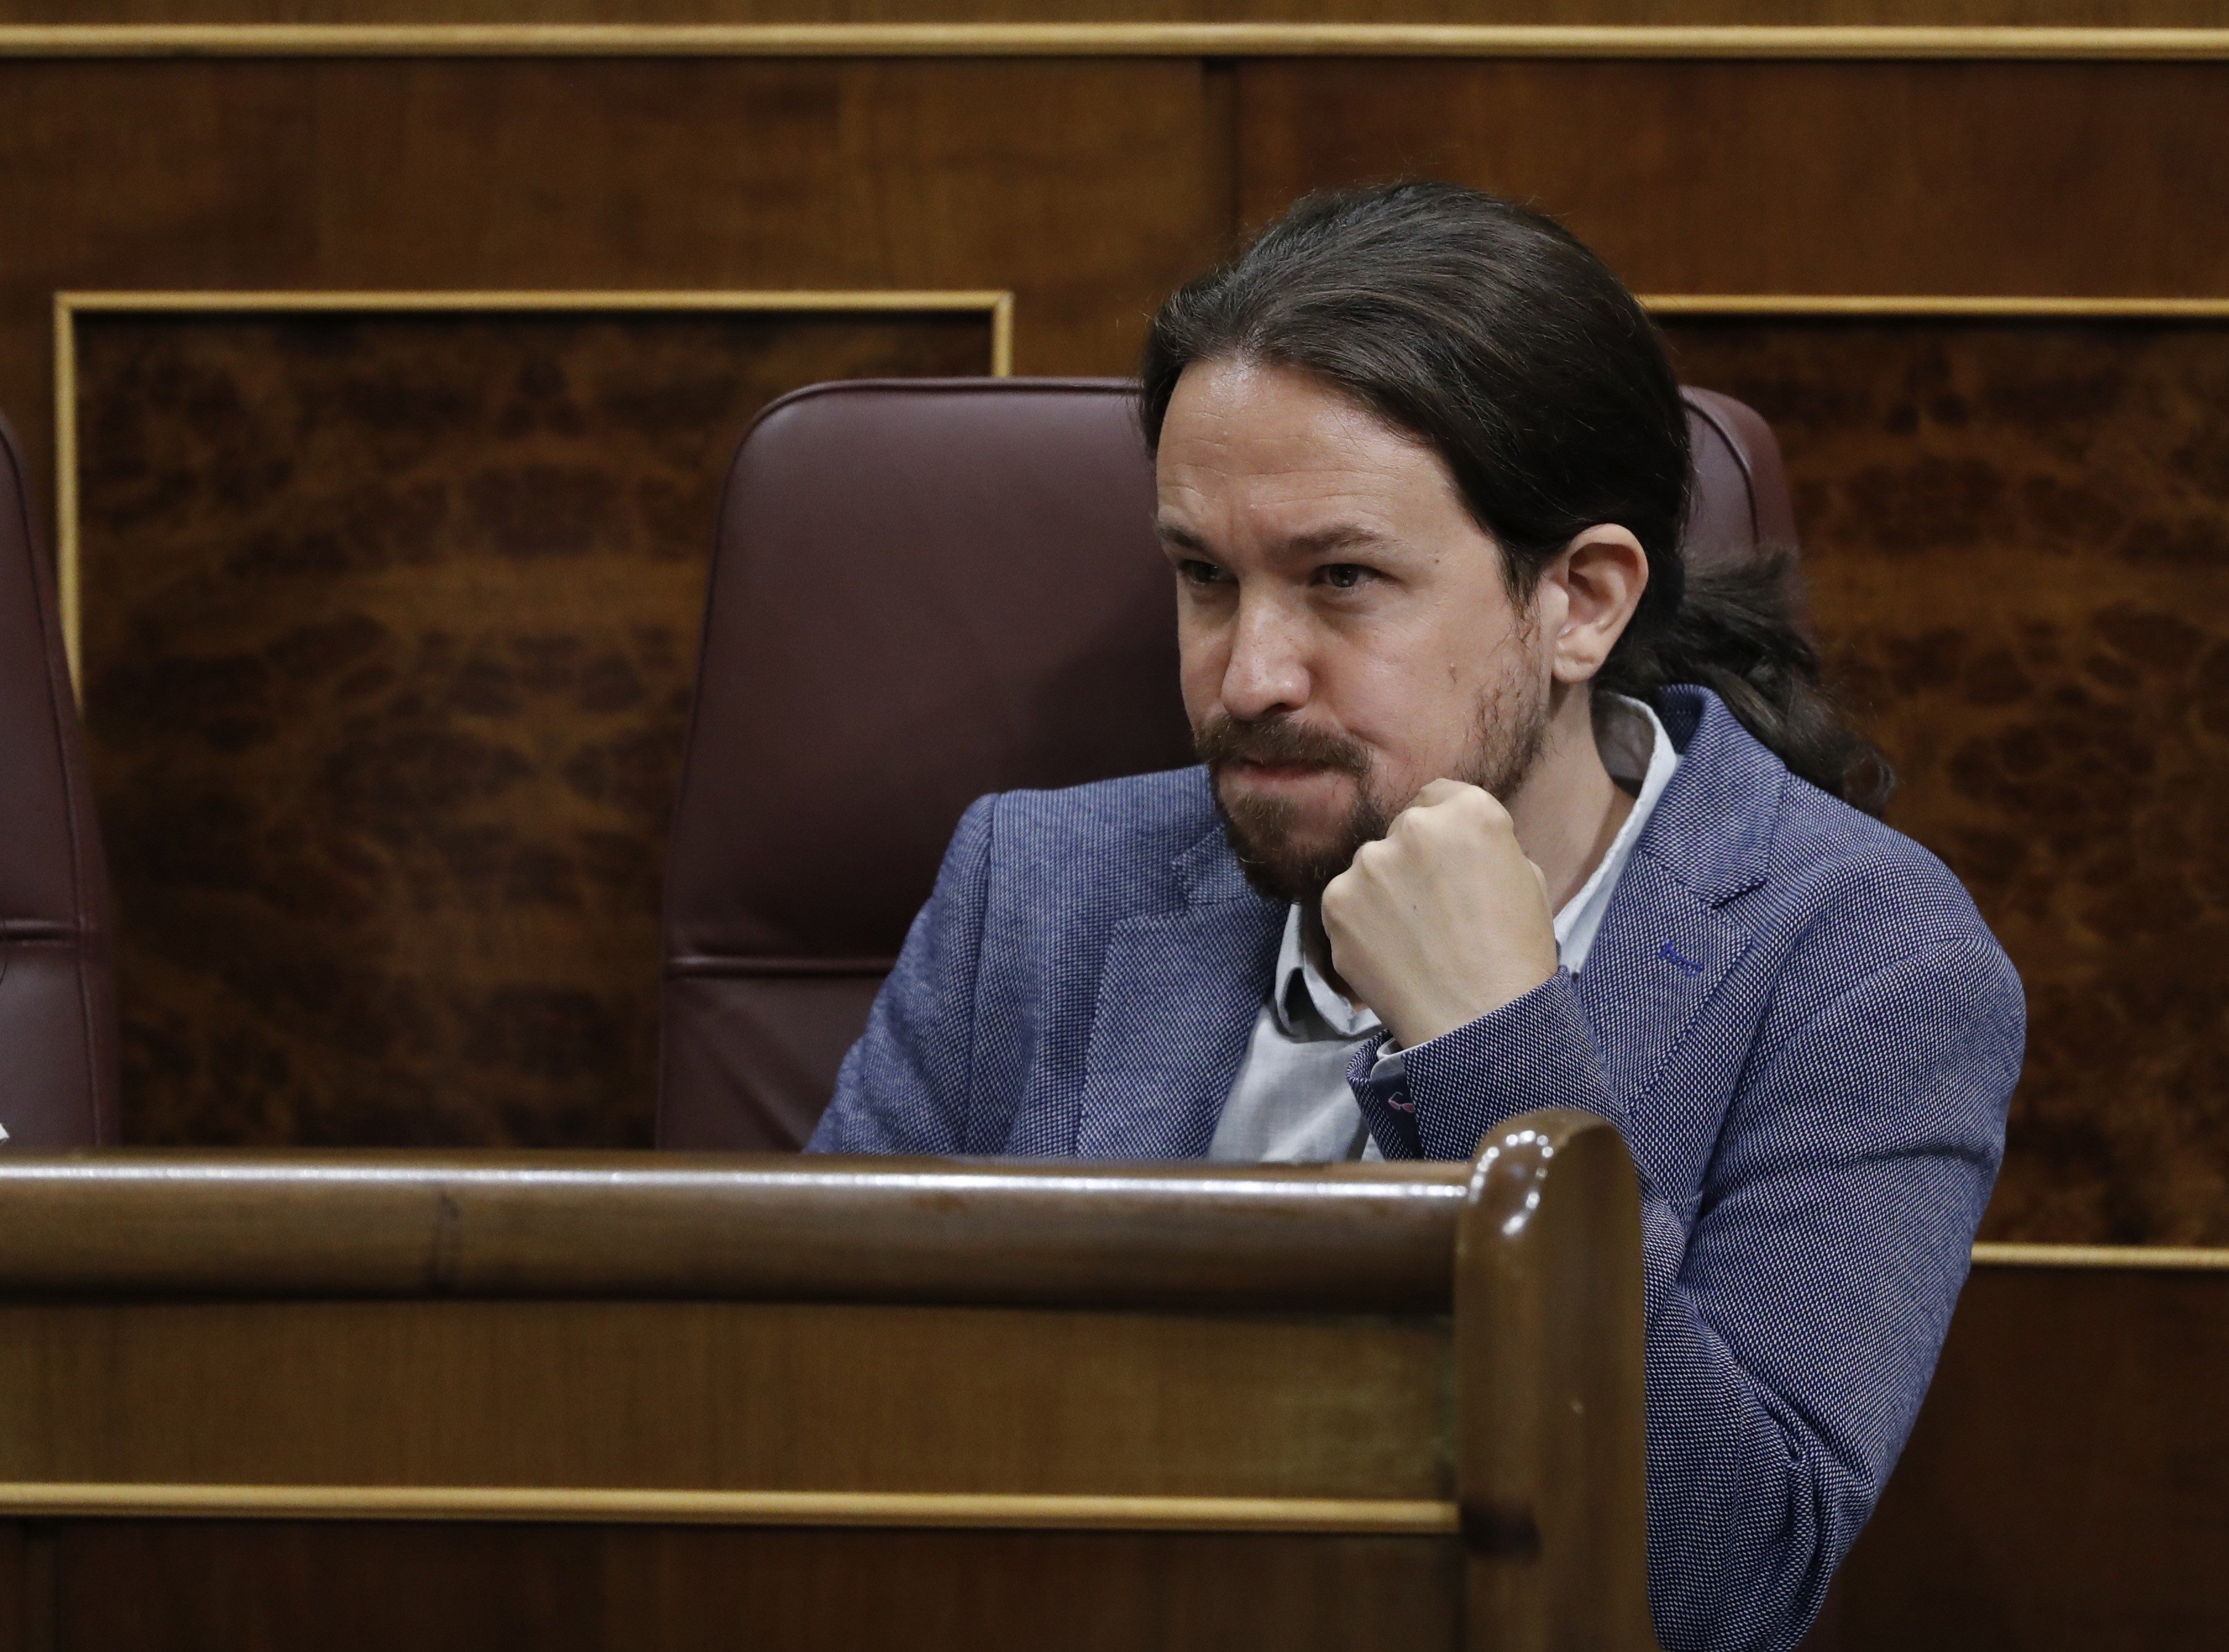 "Do you call this a victory, Mr Rajoy?" asks Podemos leader Iglesias